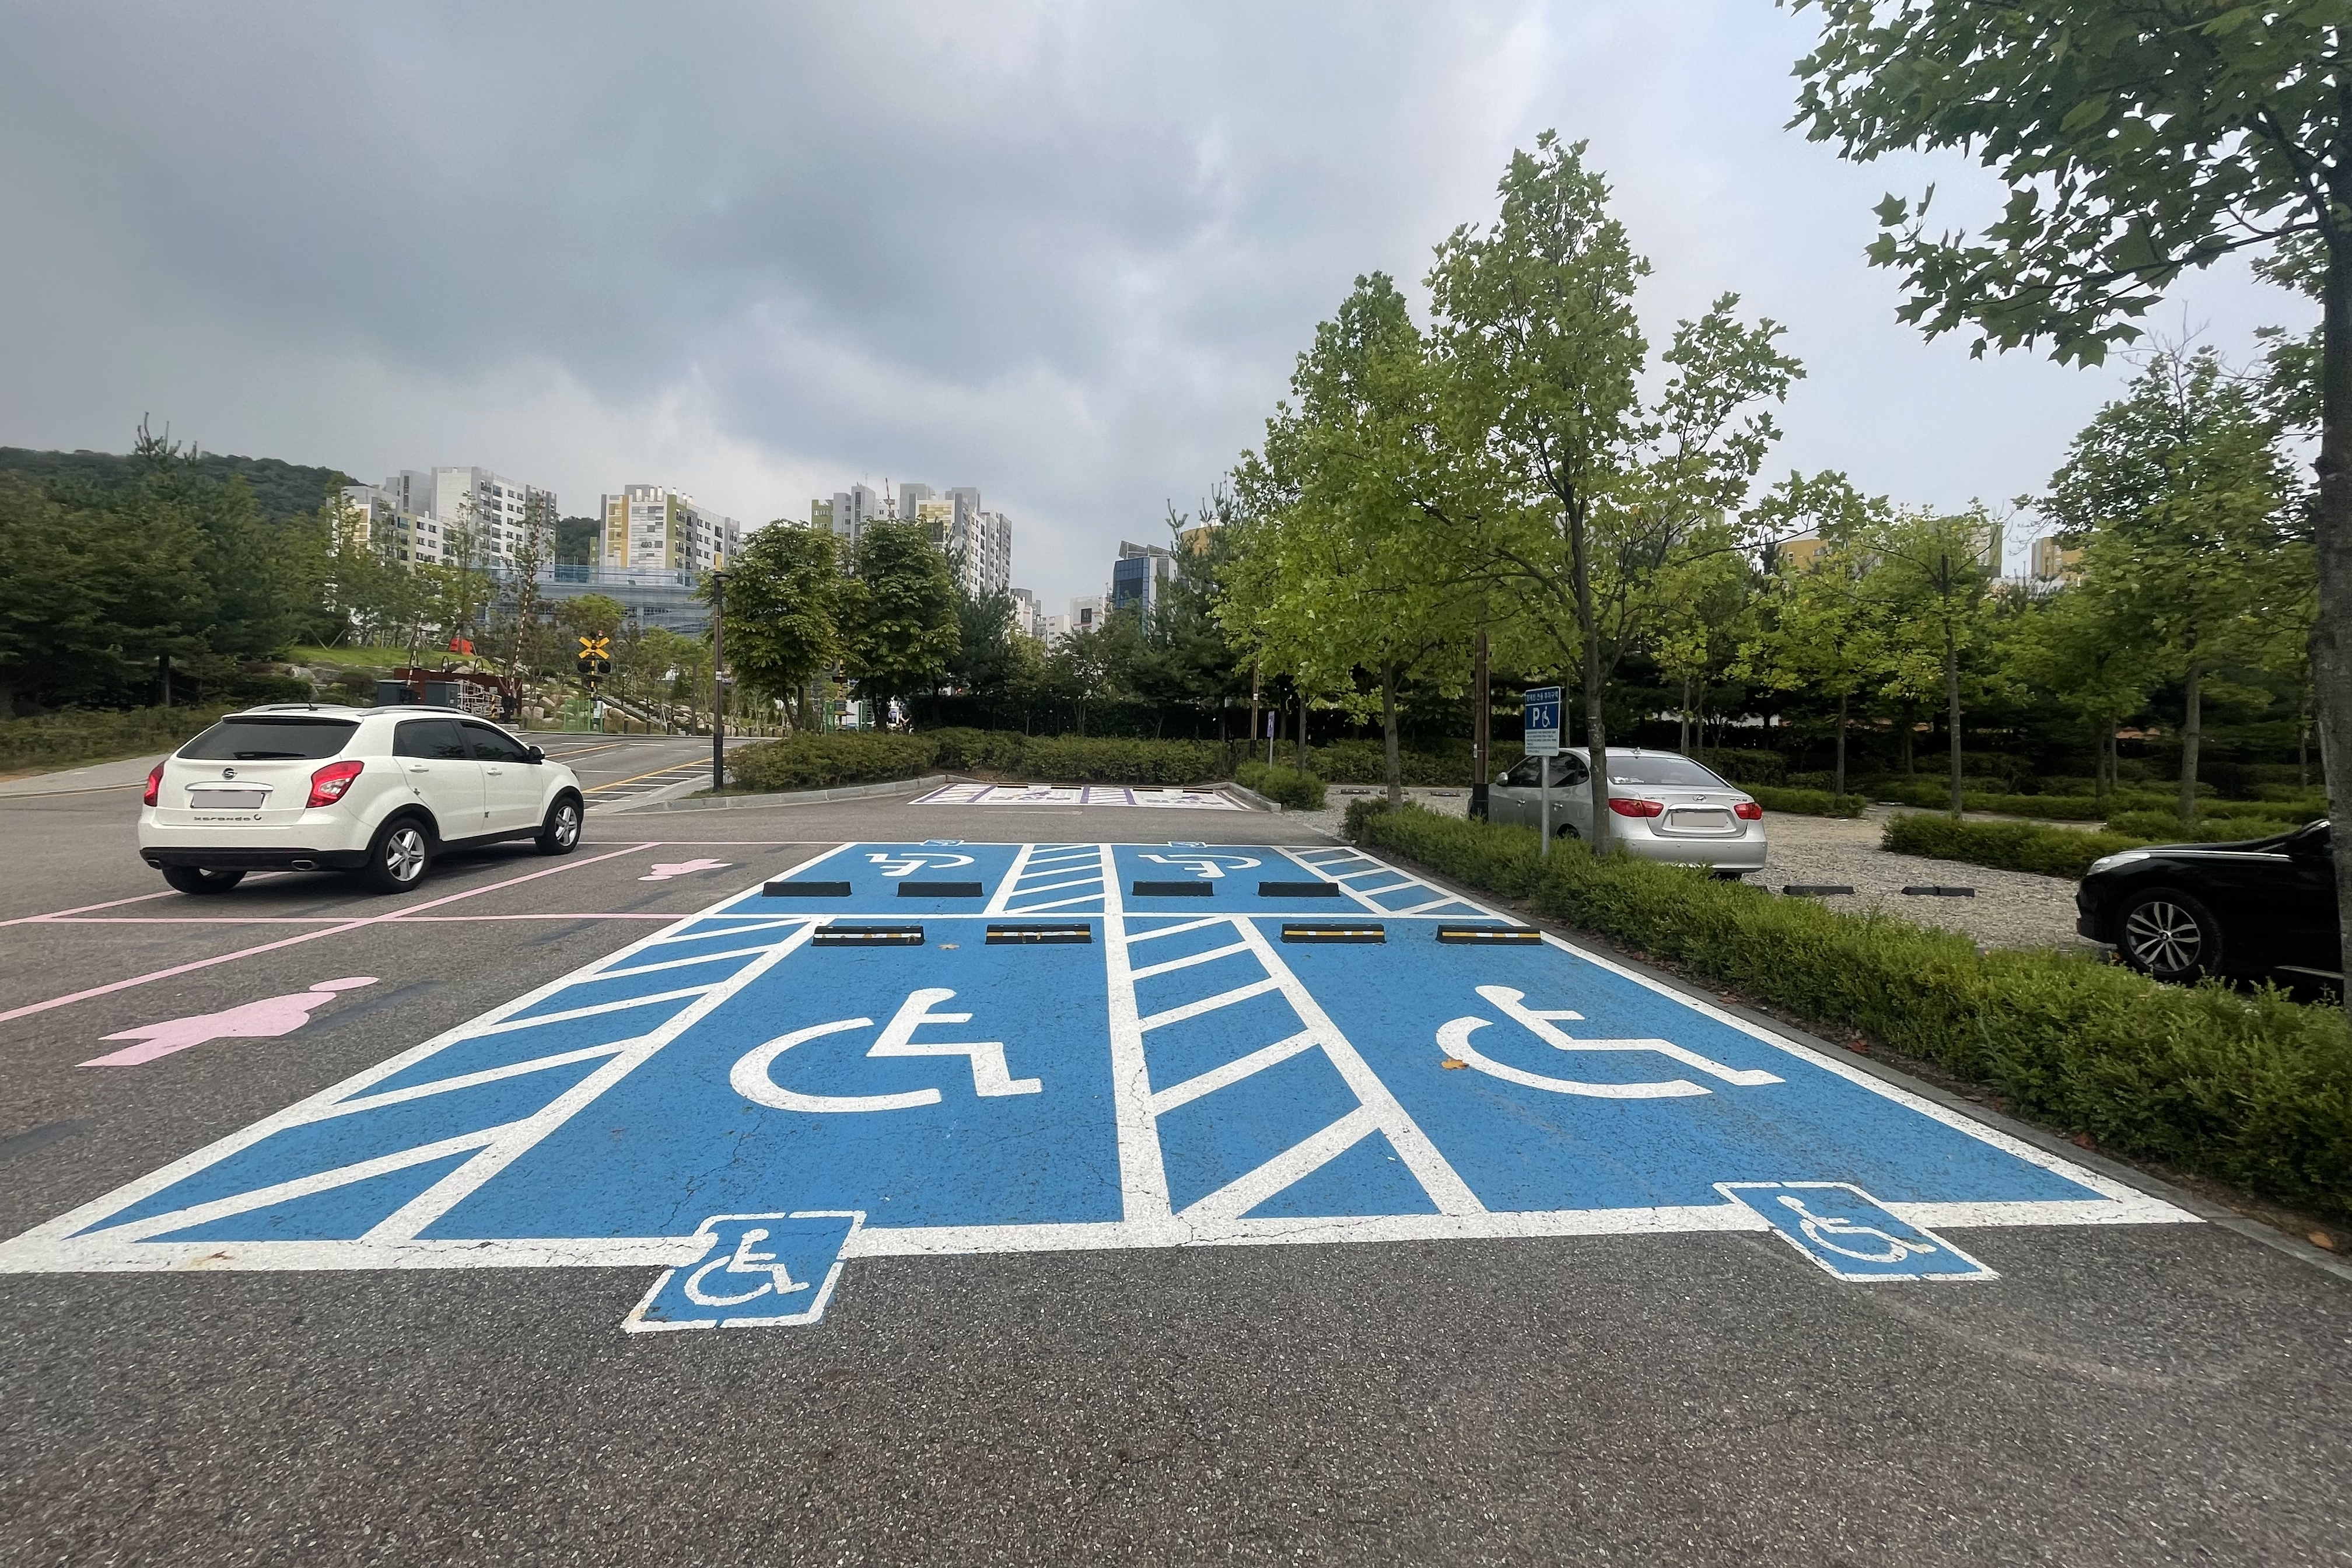 Parking lots0 : Accessible parking lots in Pureun Arboretum
